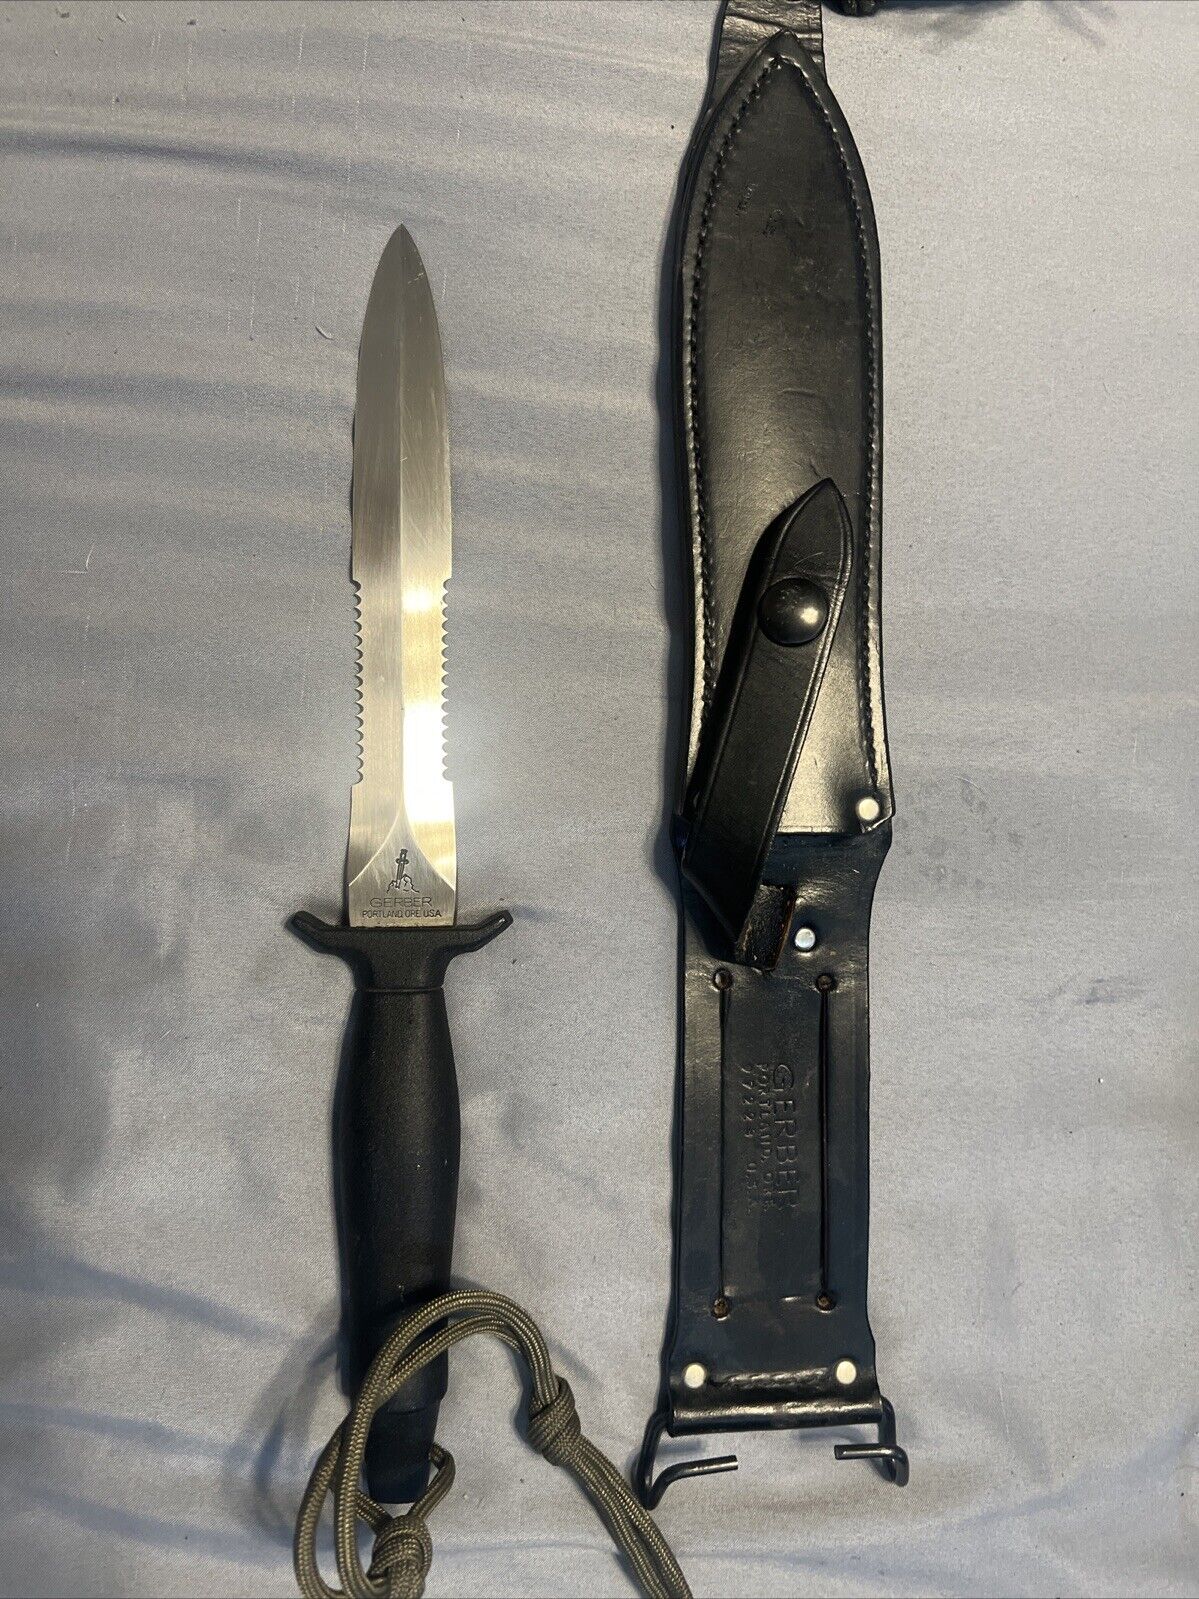 RARE VINTAGE ORIGINAL GERBER MK2 DAGGER STYLE KNIFE AND SHEATH MADE IN 1977